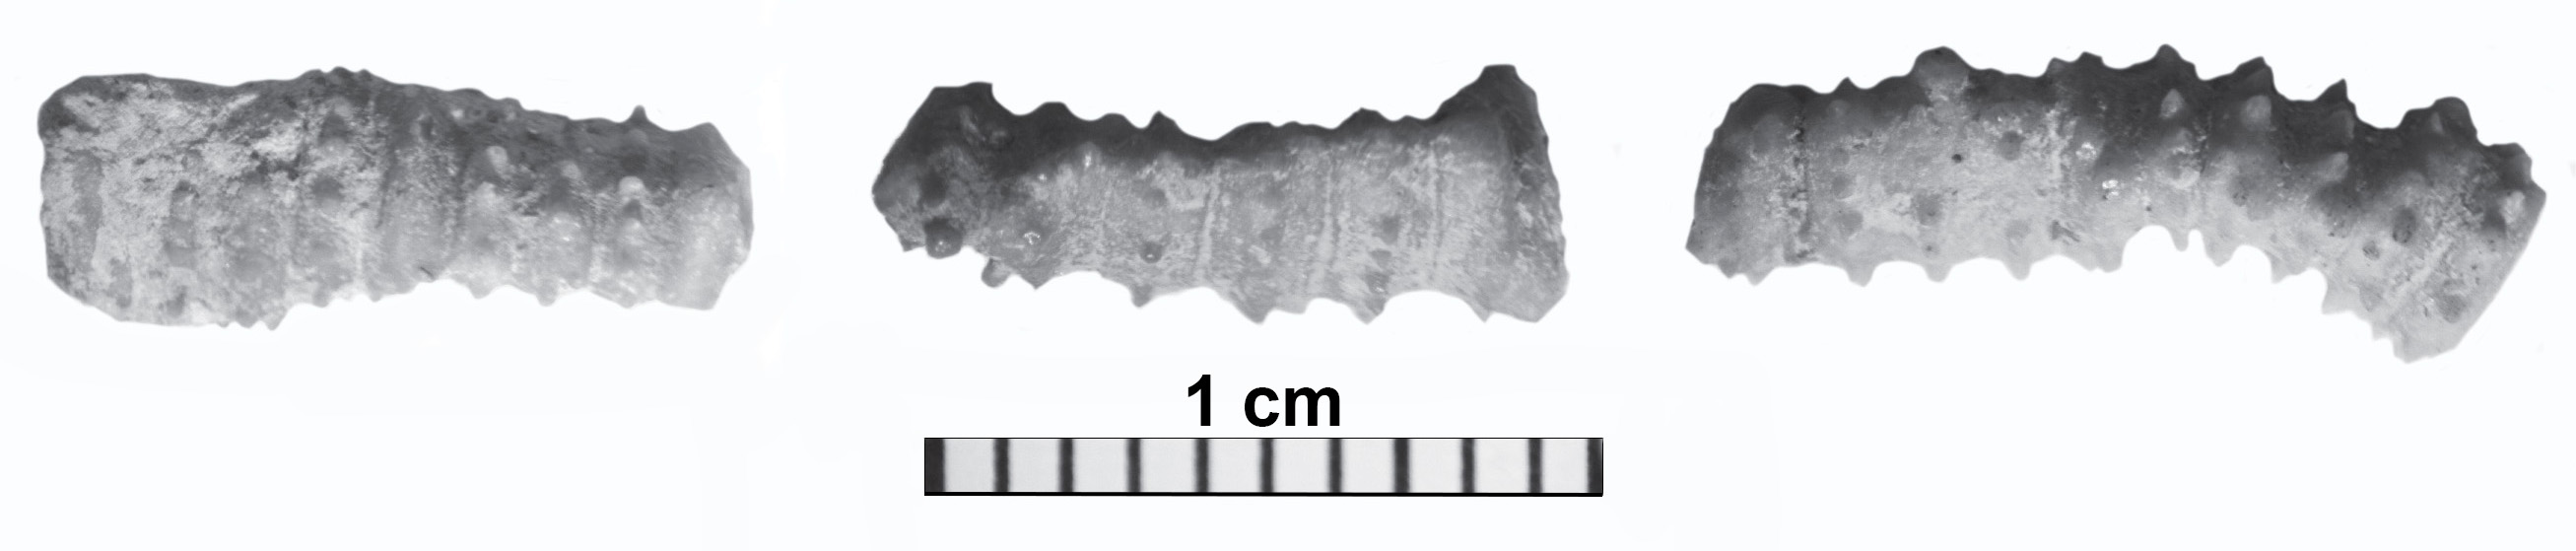 Tiny, loose, Platycrinites
penicillus column fragments.